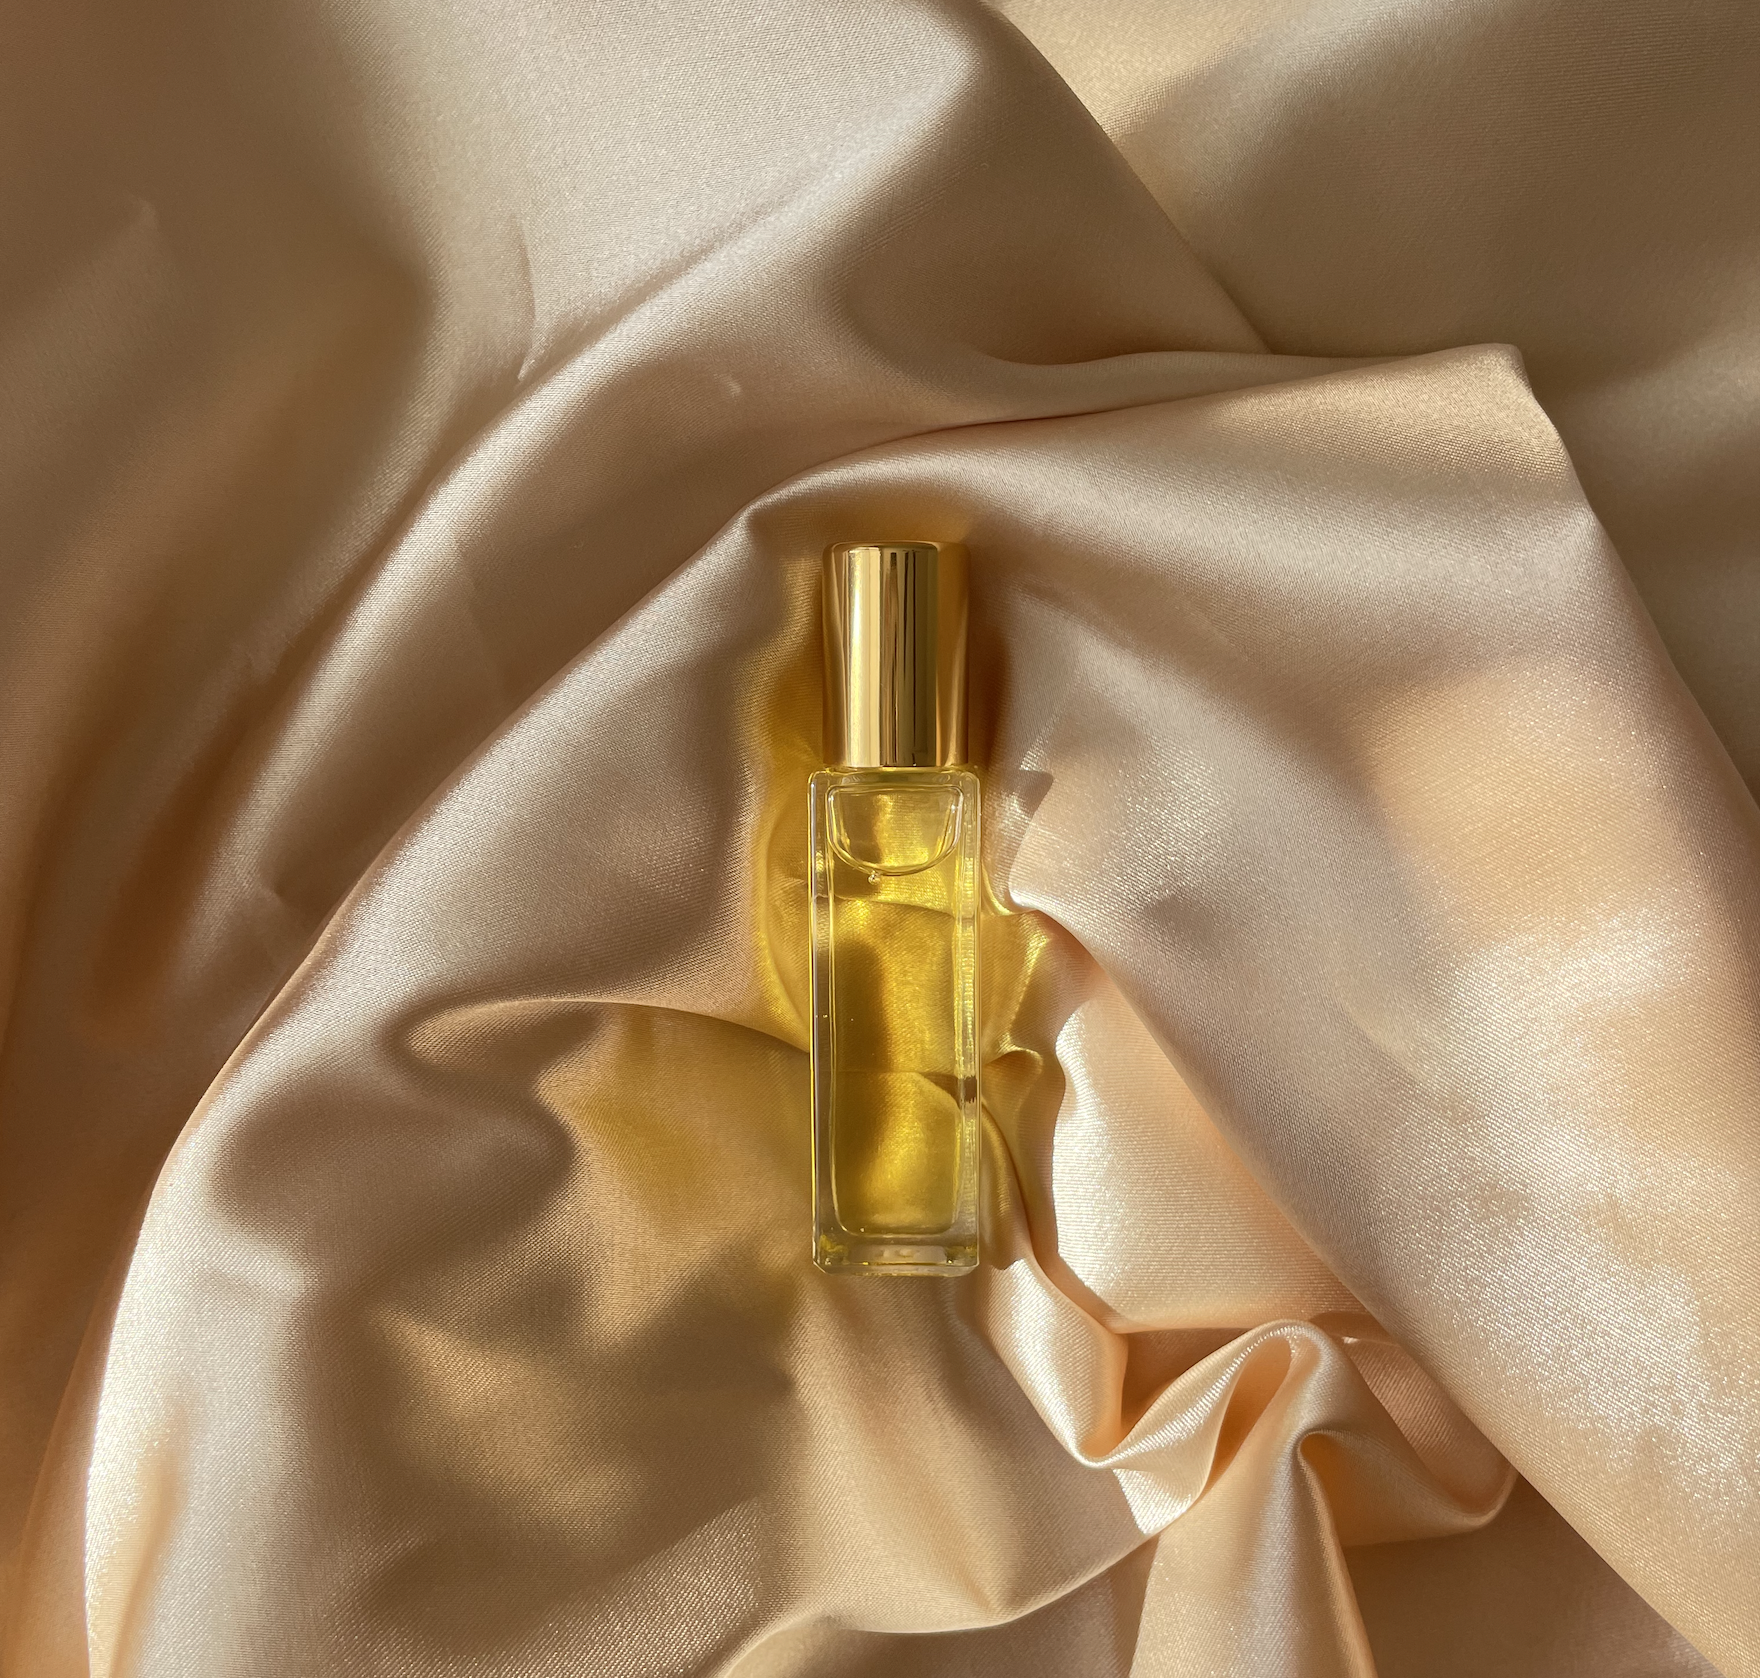 Chanel CHANCE type body oil-Women's Perfume- Alcohol Free Designer